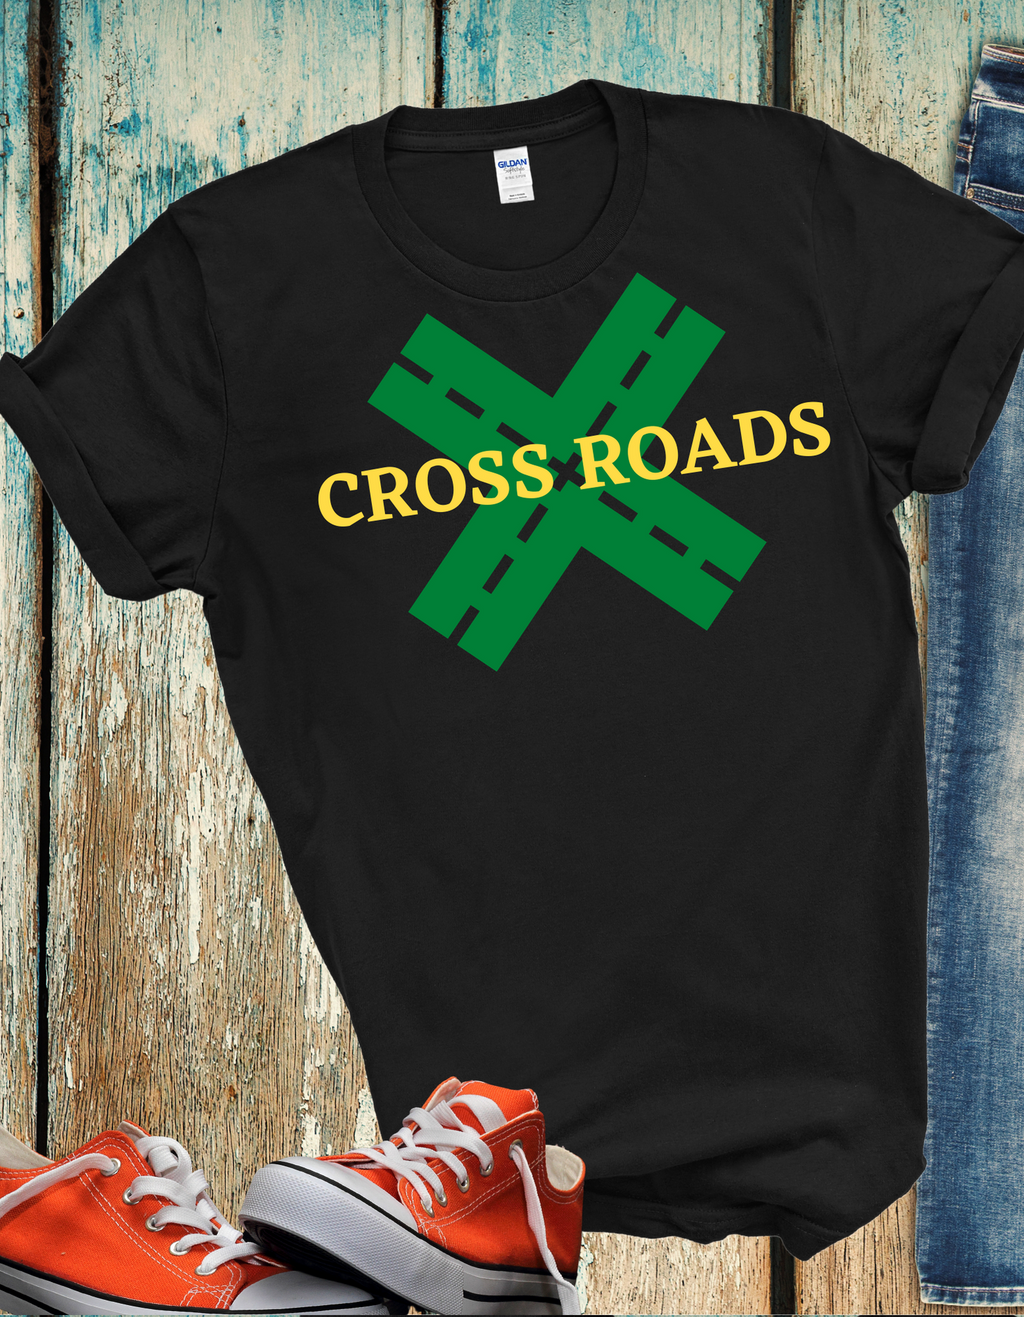 Crossroads tees.